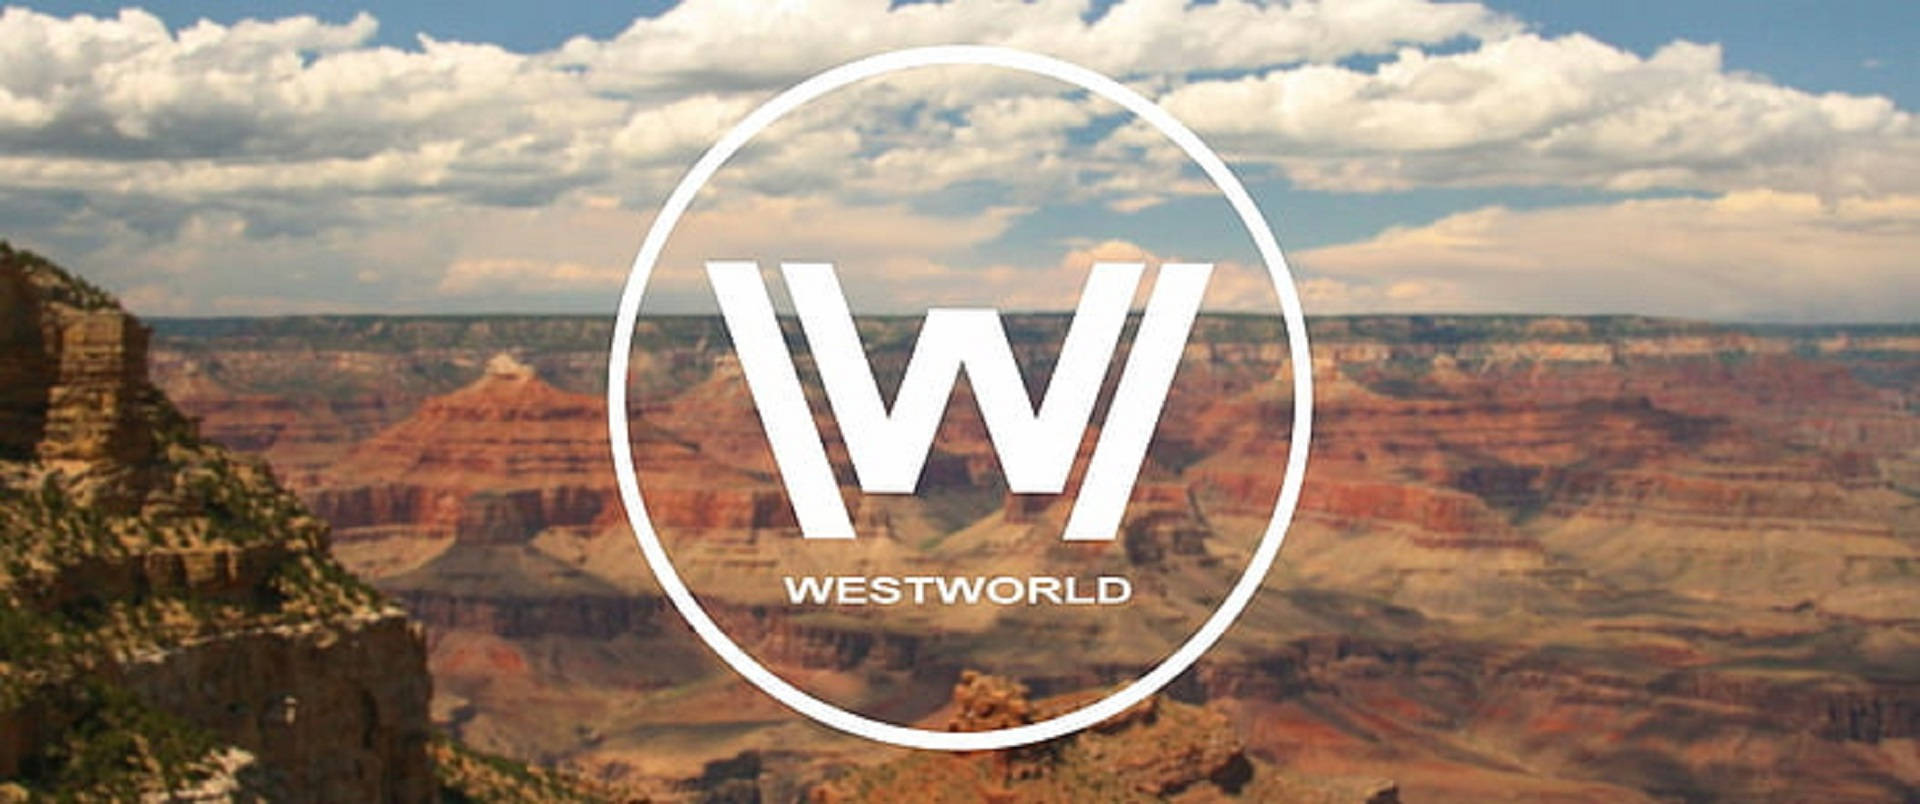 Westworld Logo In Mountain Cliff Background